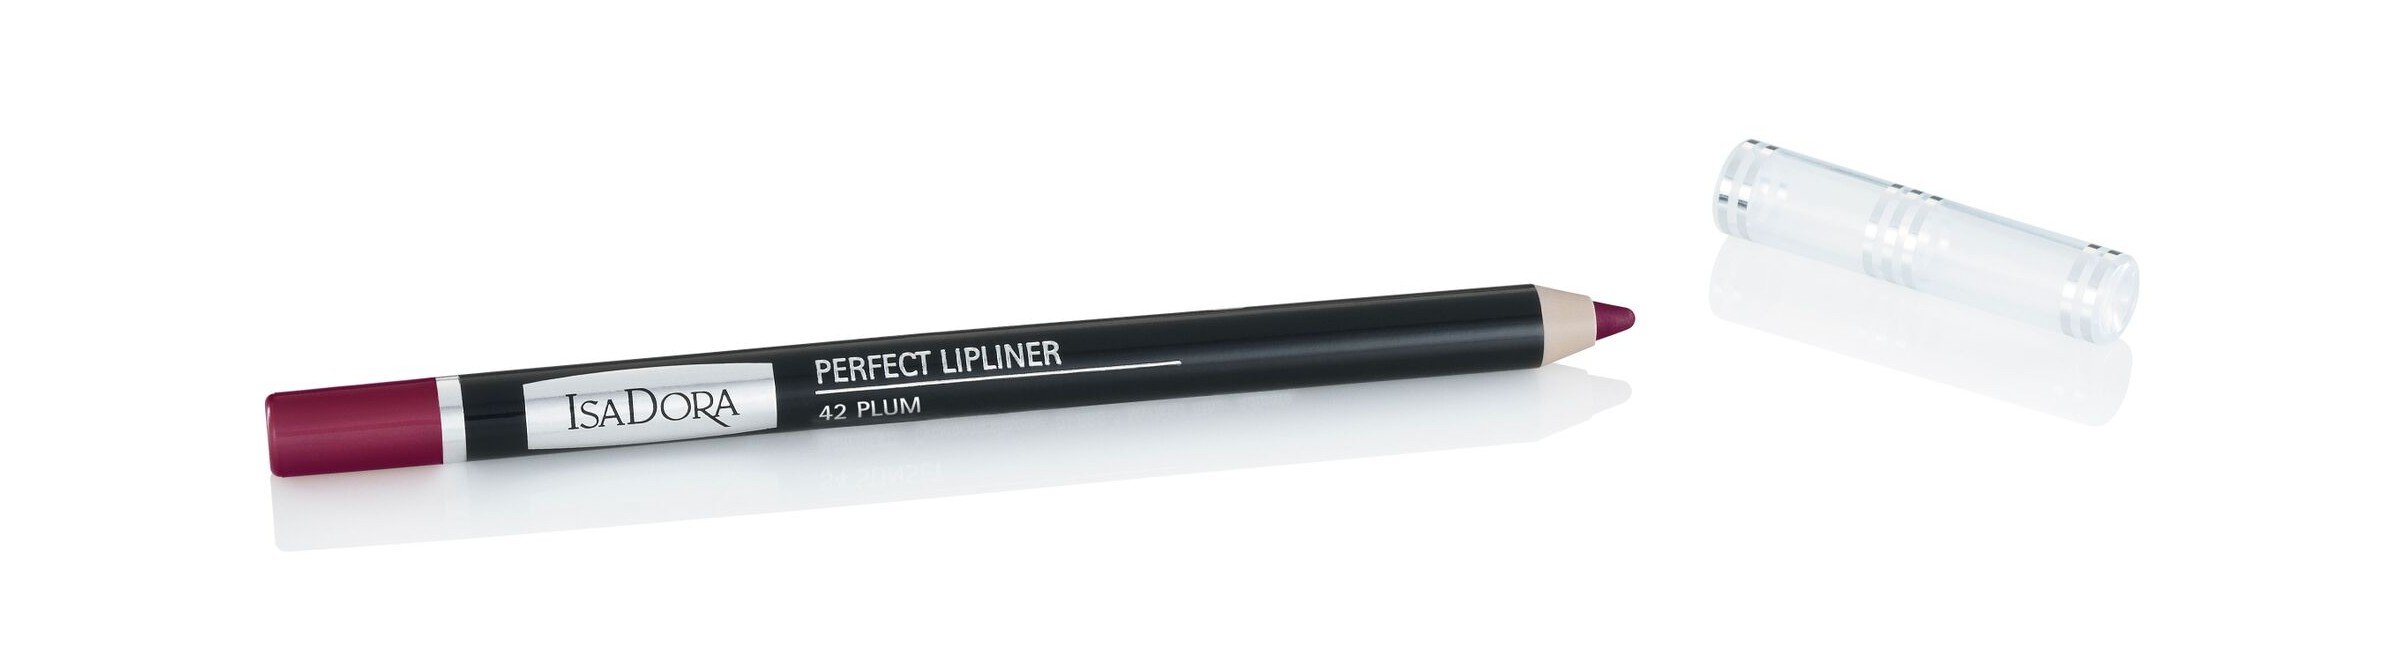  IsaDora Perfect Lipliner - 42 Plum